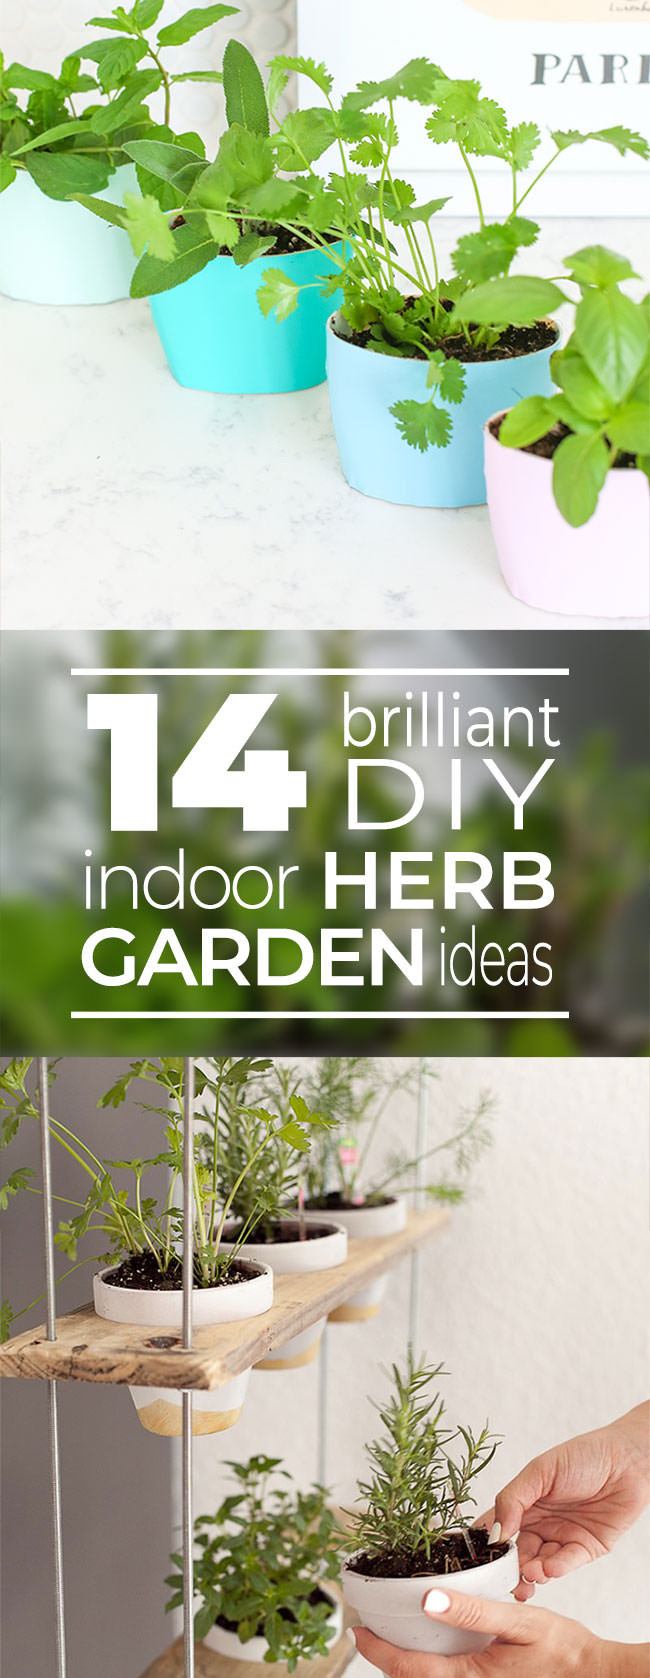 Best ideas about DIY Indoor Herb Garden With Grow Light
. Save or Pin 14 Brilliant DIY Indoor Herb Garden Ideas Now.